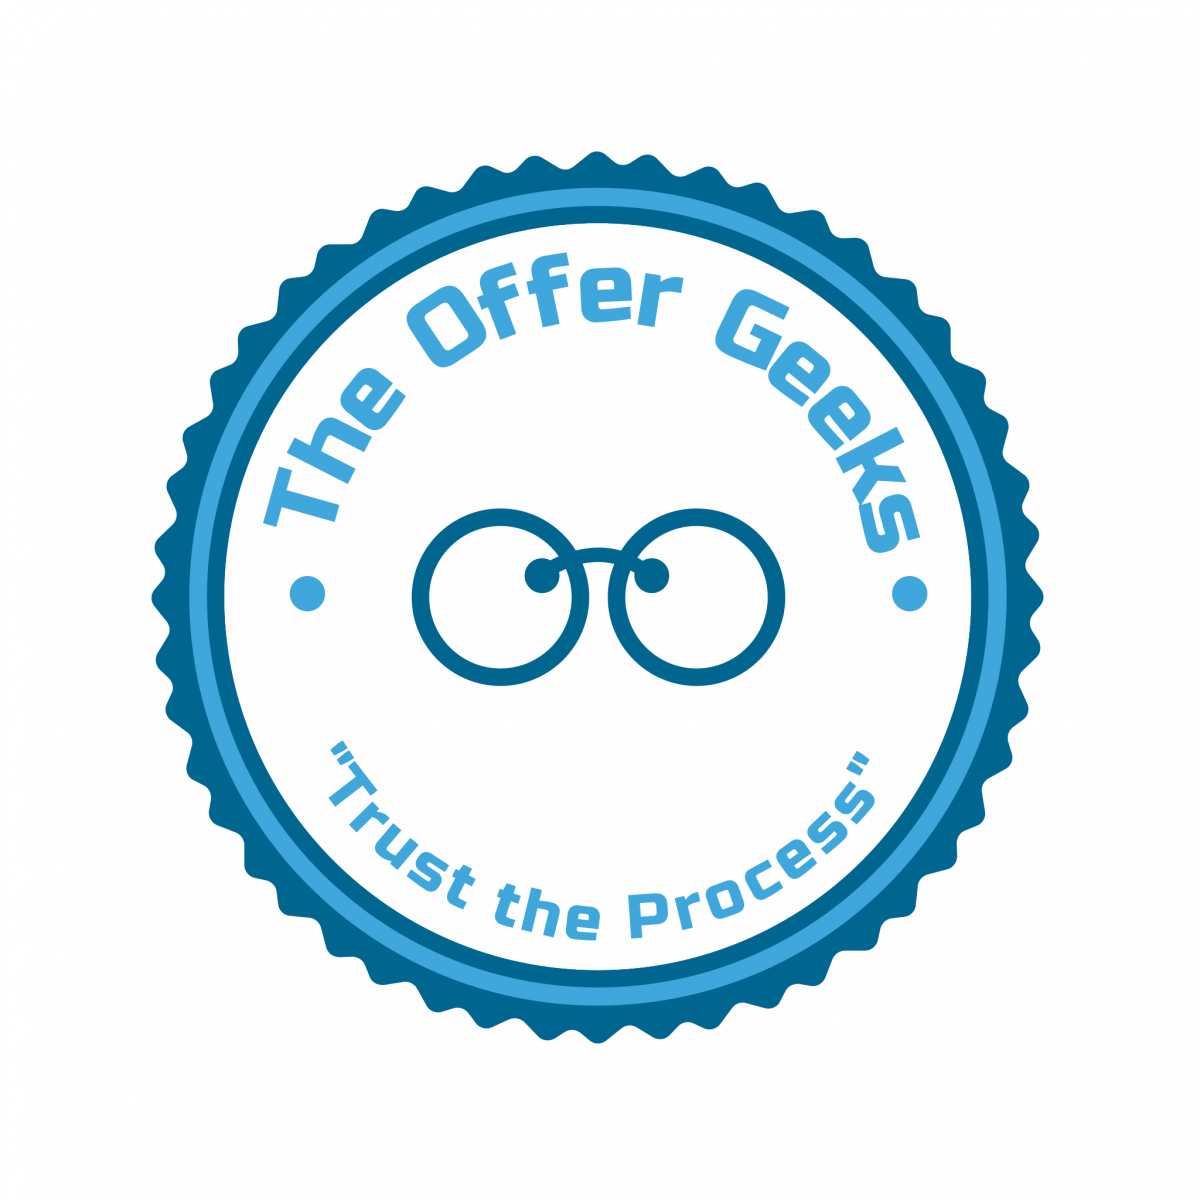 The Offer Geeks  logo